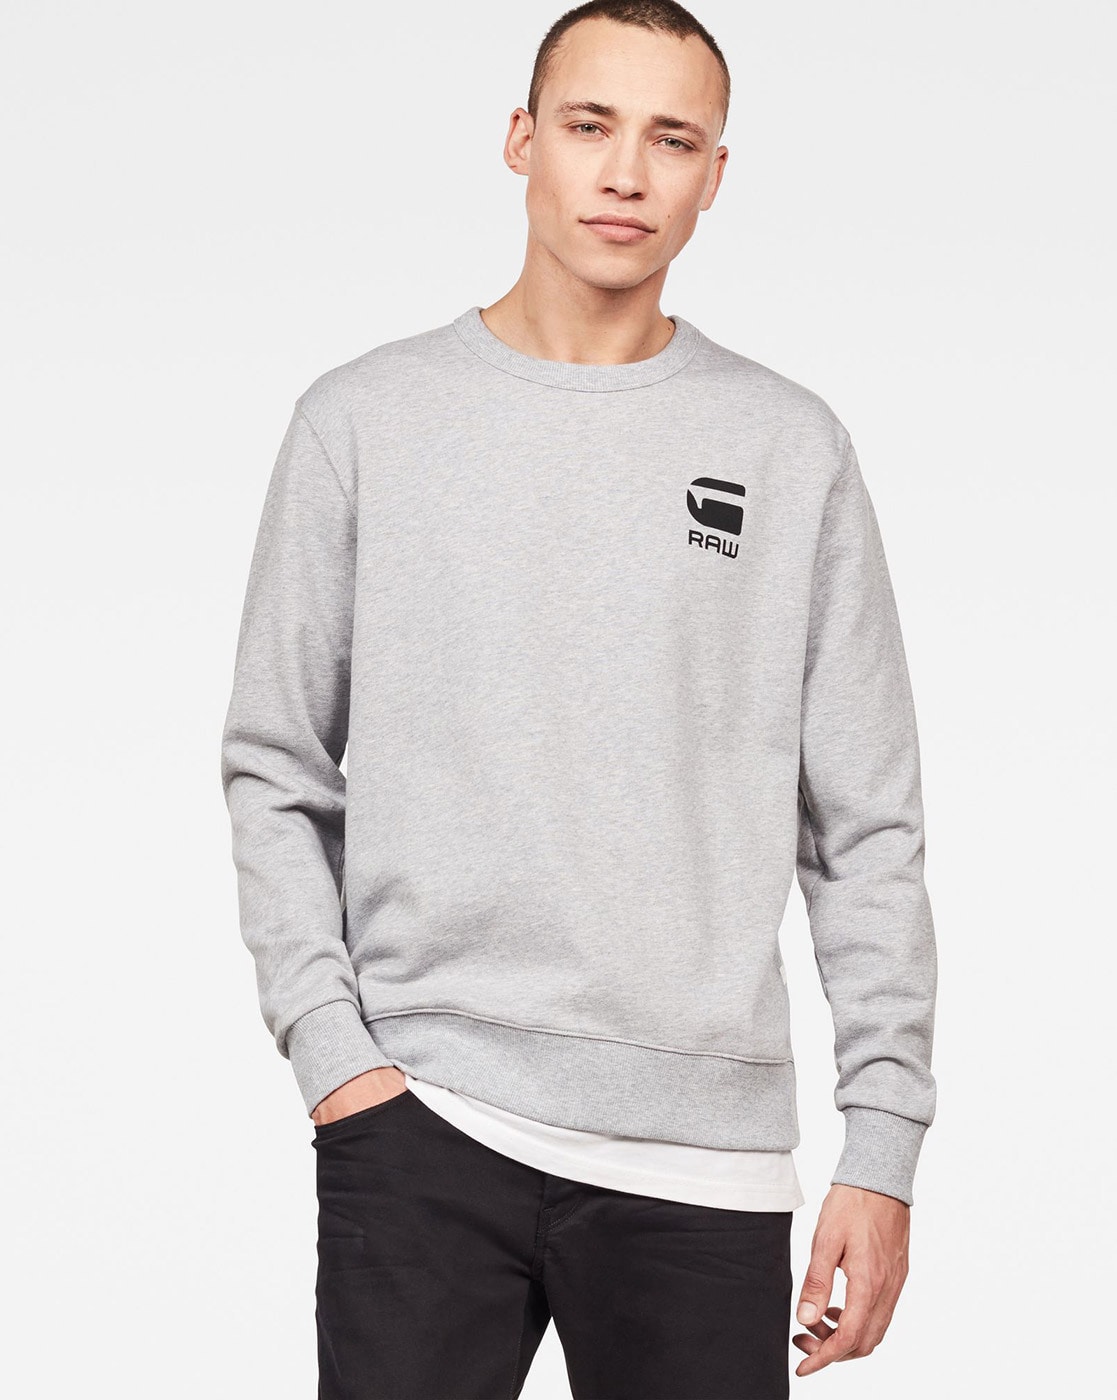 Buy Grey Sweatshirt Hoodies For Men By G Star Raw Online Ajio Com